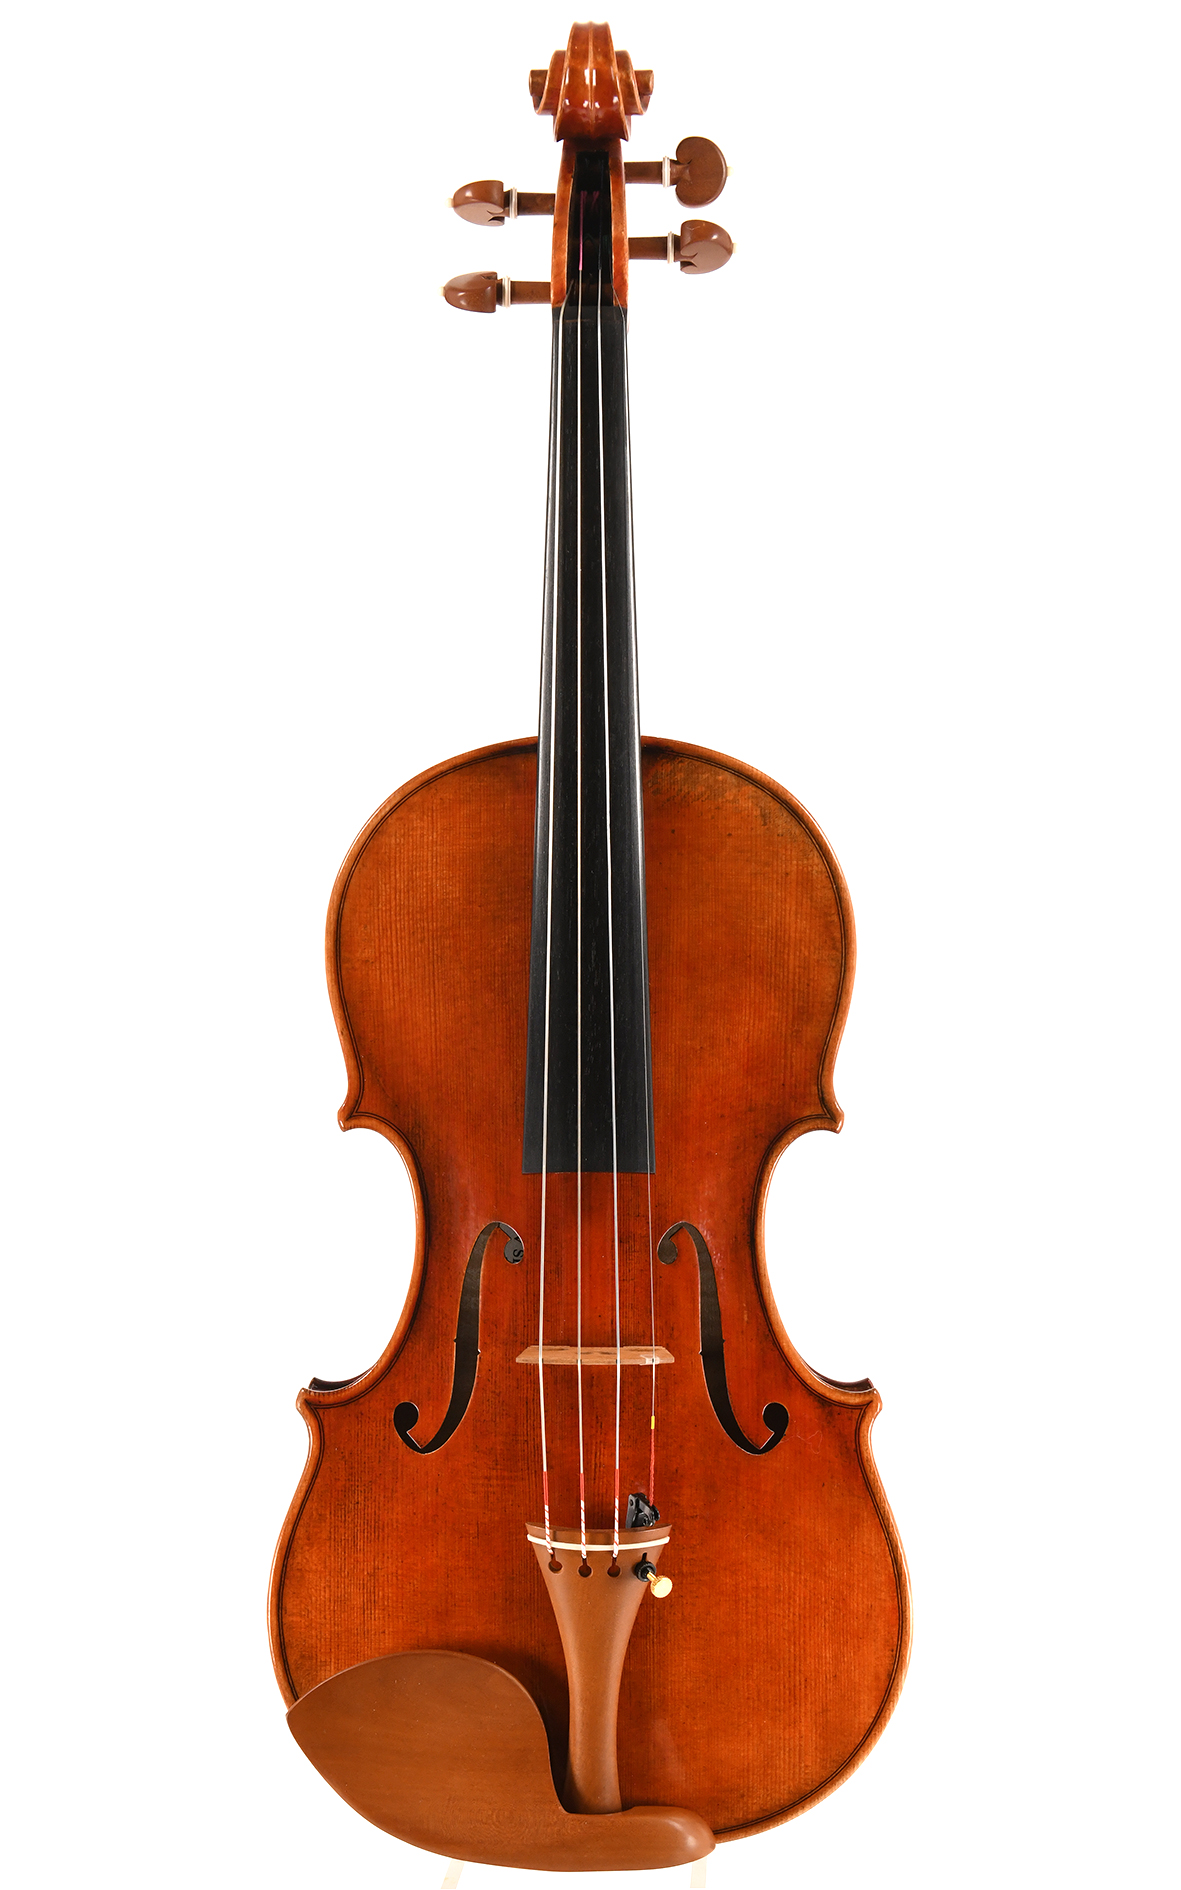 Violin / Master violin